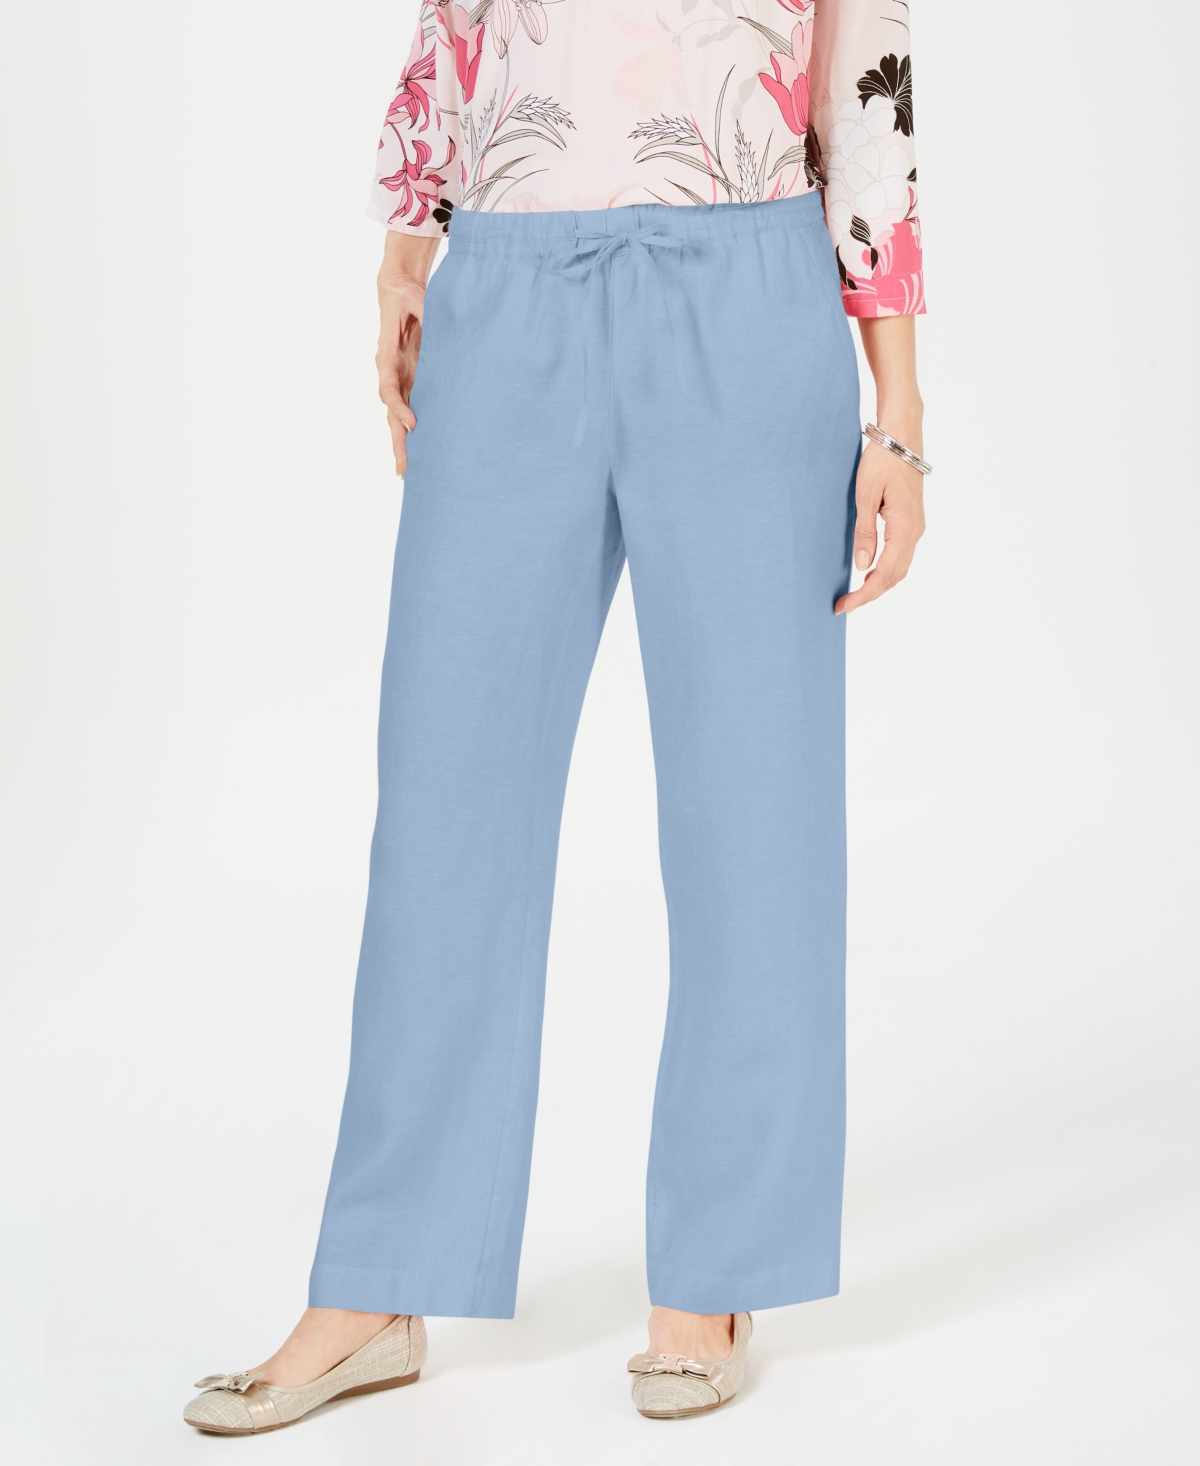 Plus Size 100% Linen Pants, Created for Macy's - Blue Ocean